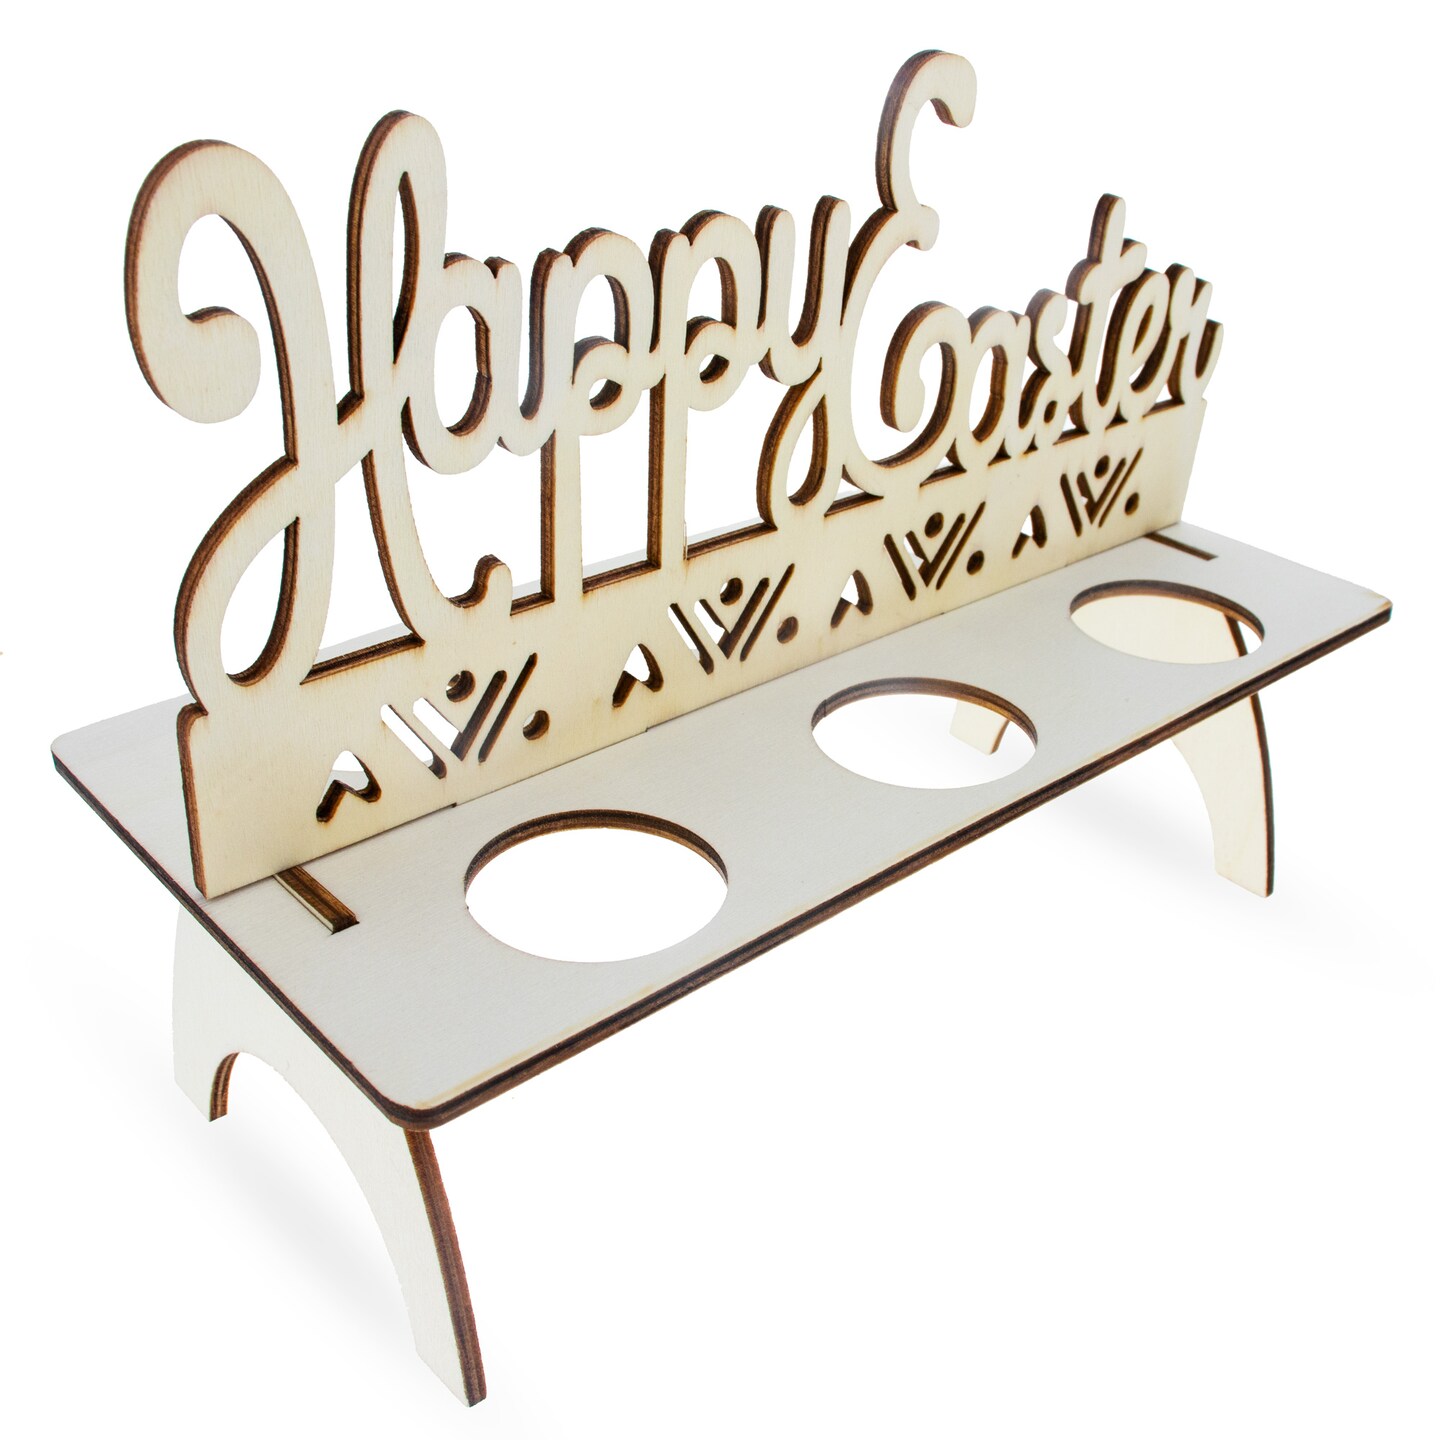 Happy Easter Wooden Multiple Egg Shelf Stand Holder Display